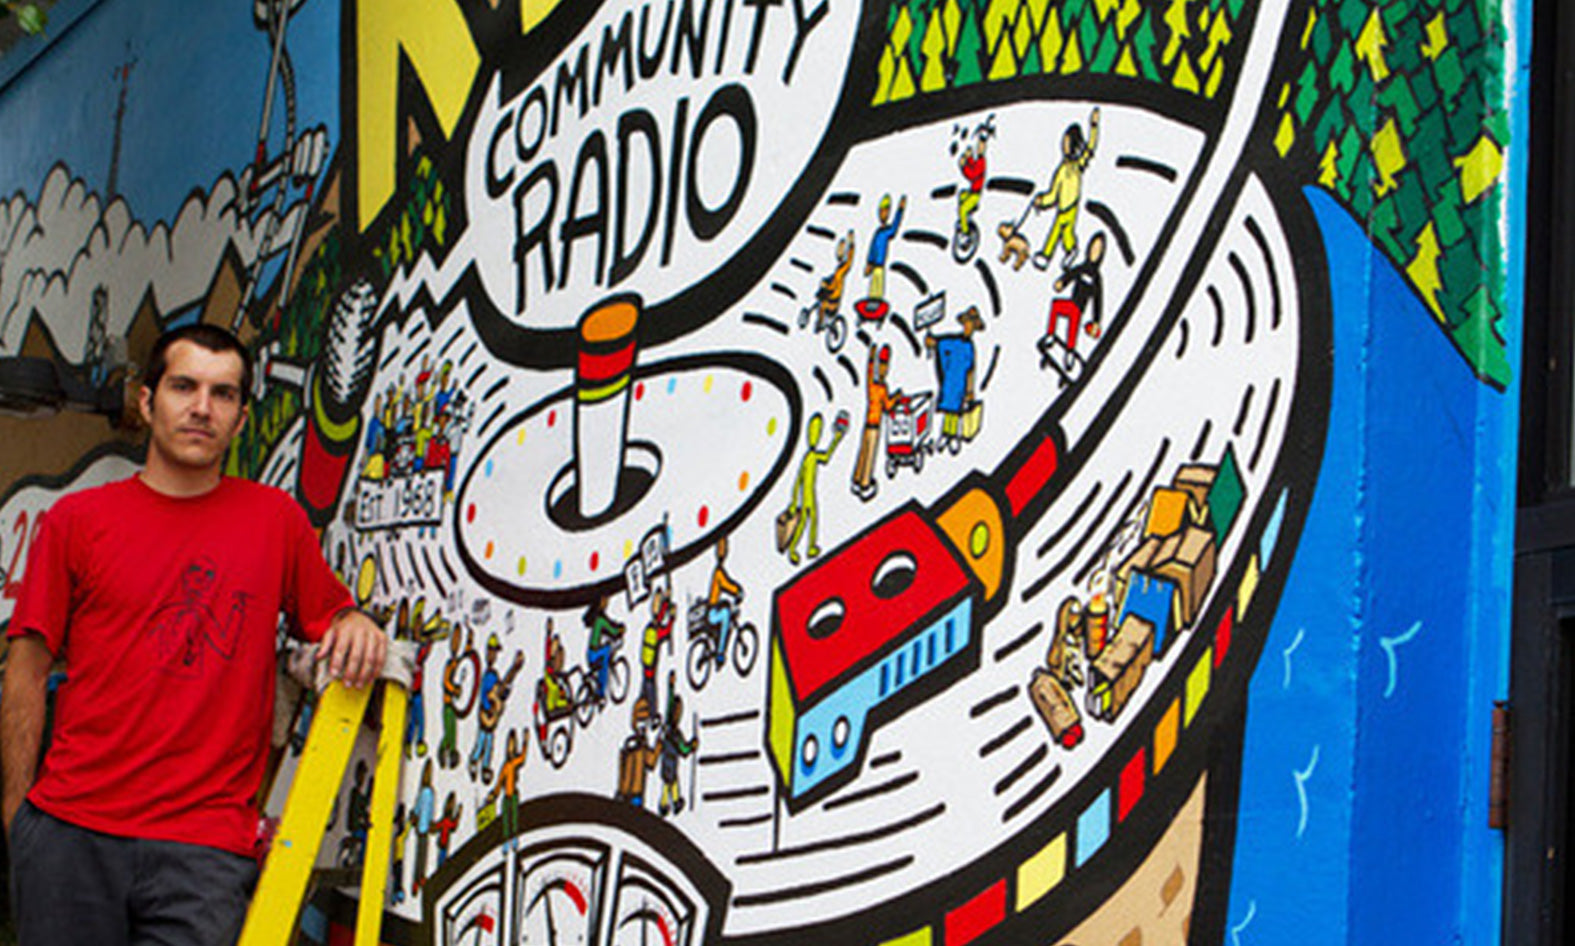 'KBOO Community Radio' Mural